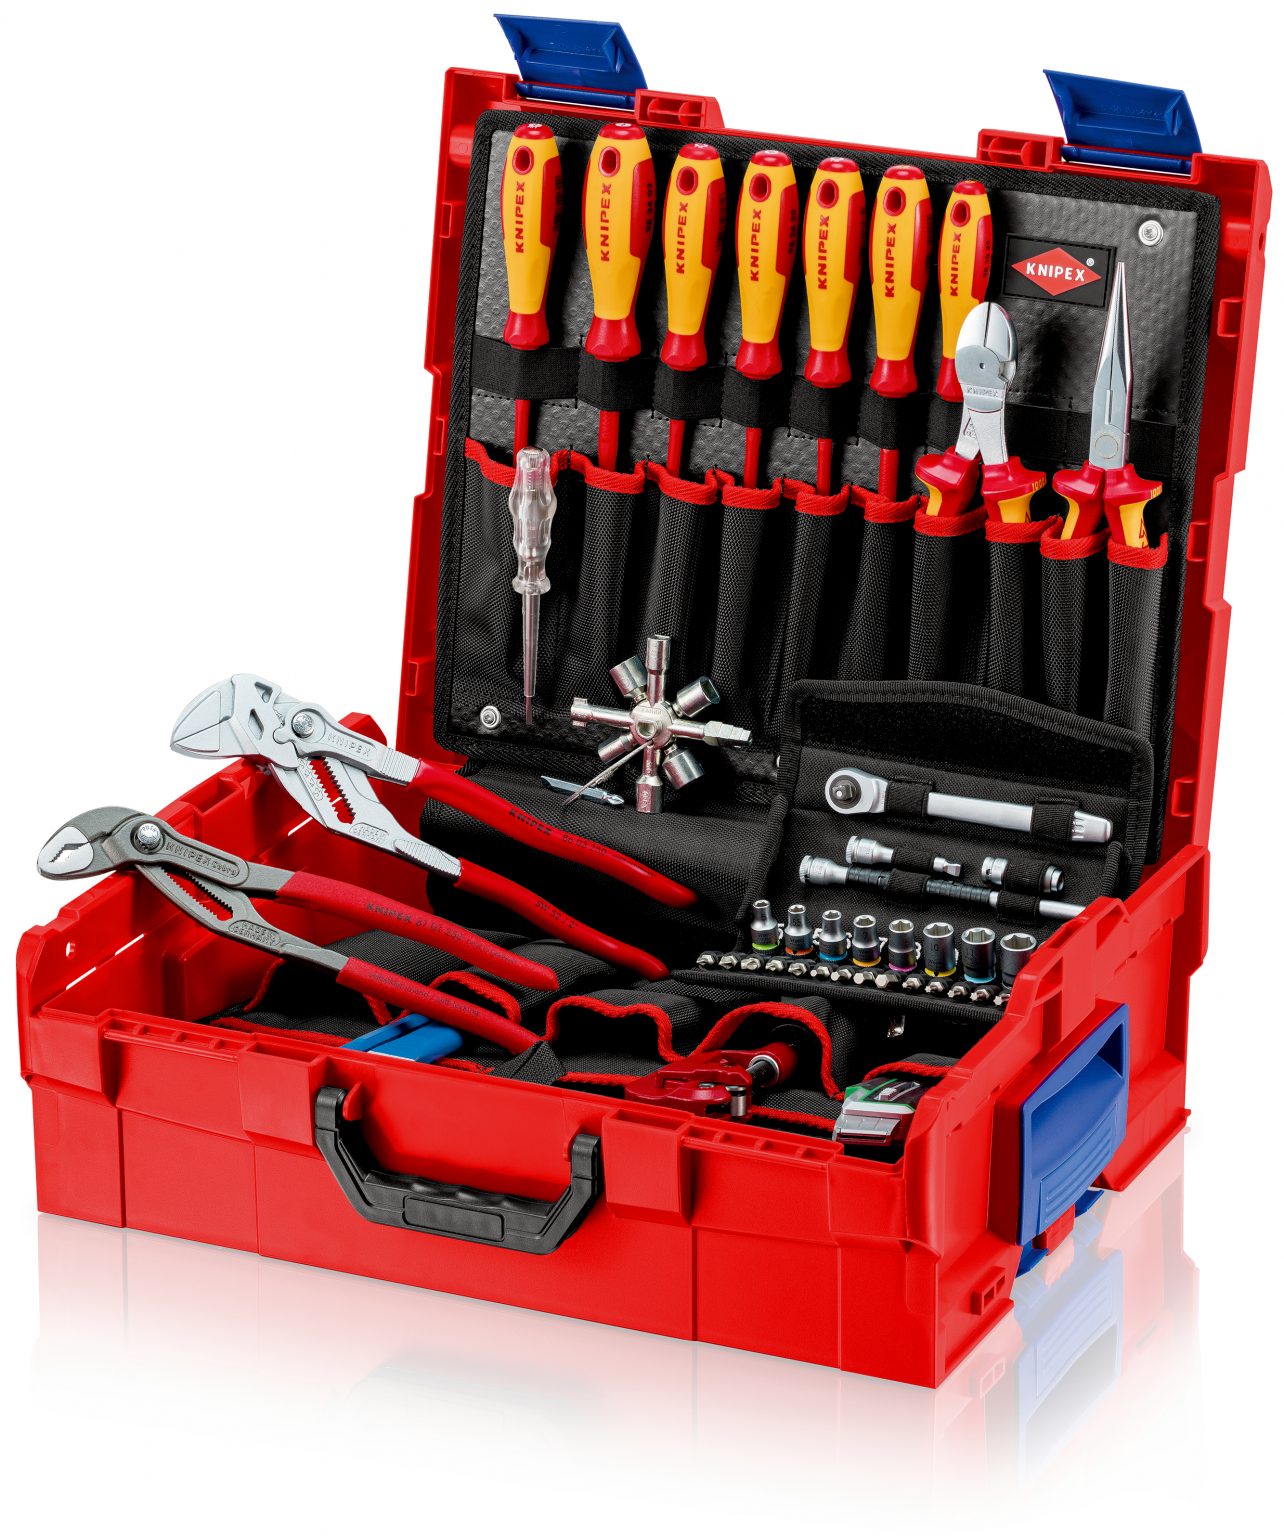 Plumbing tool kits deals